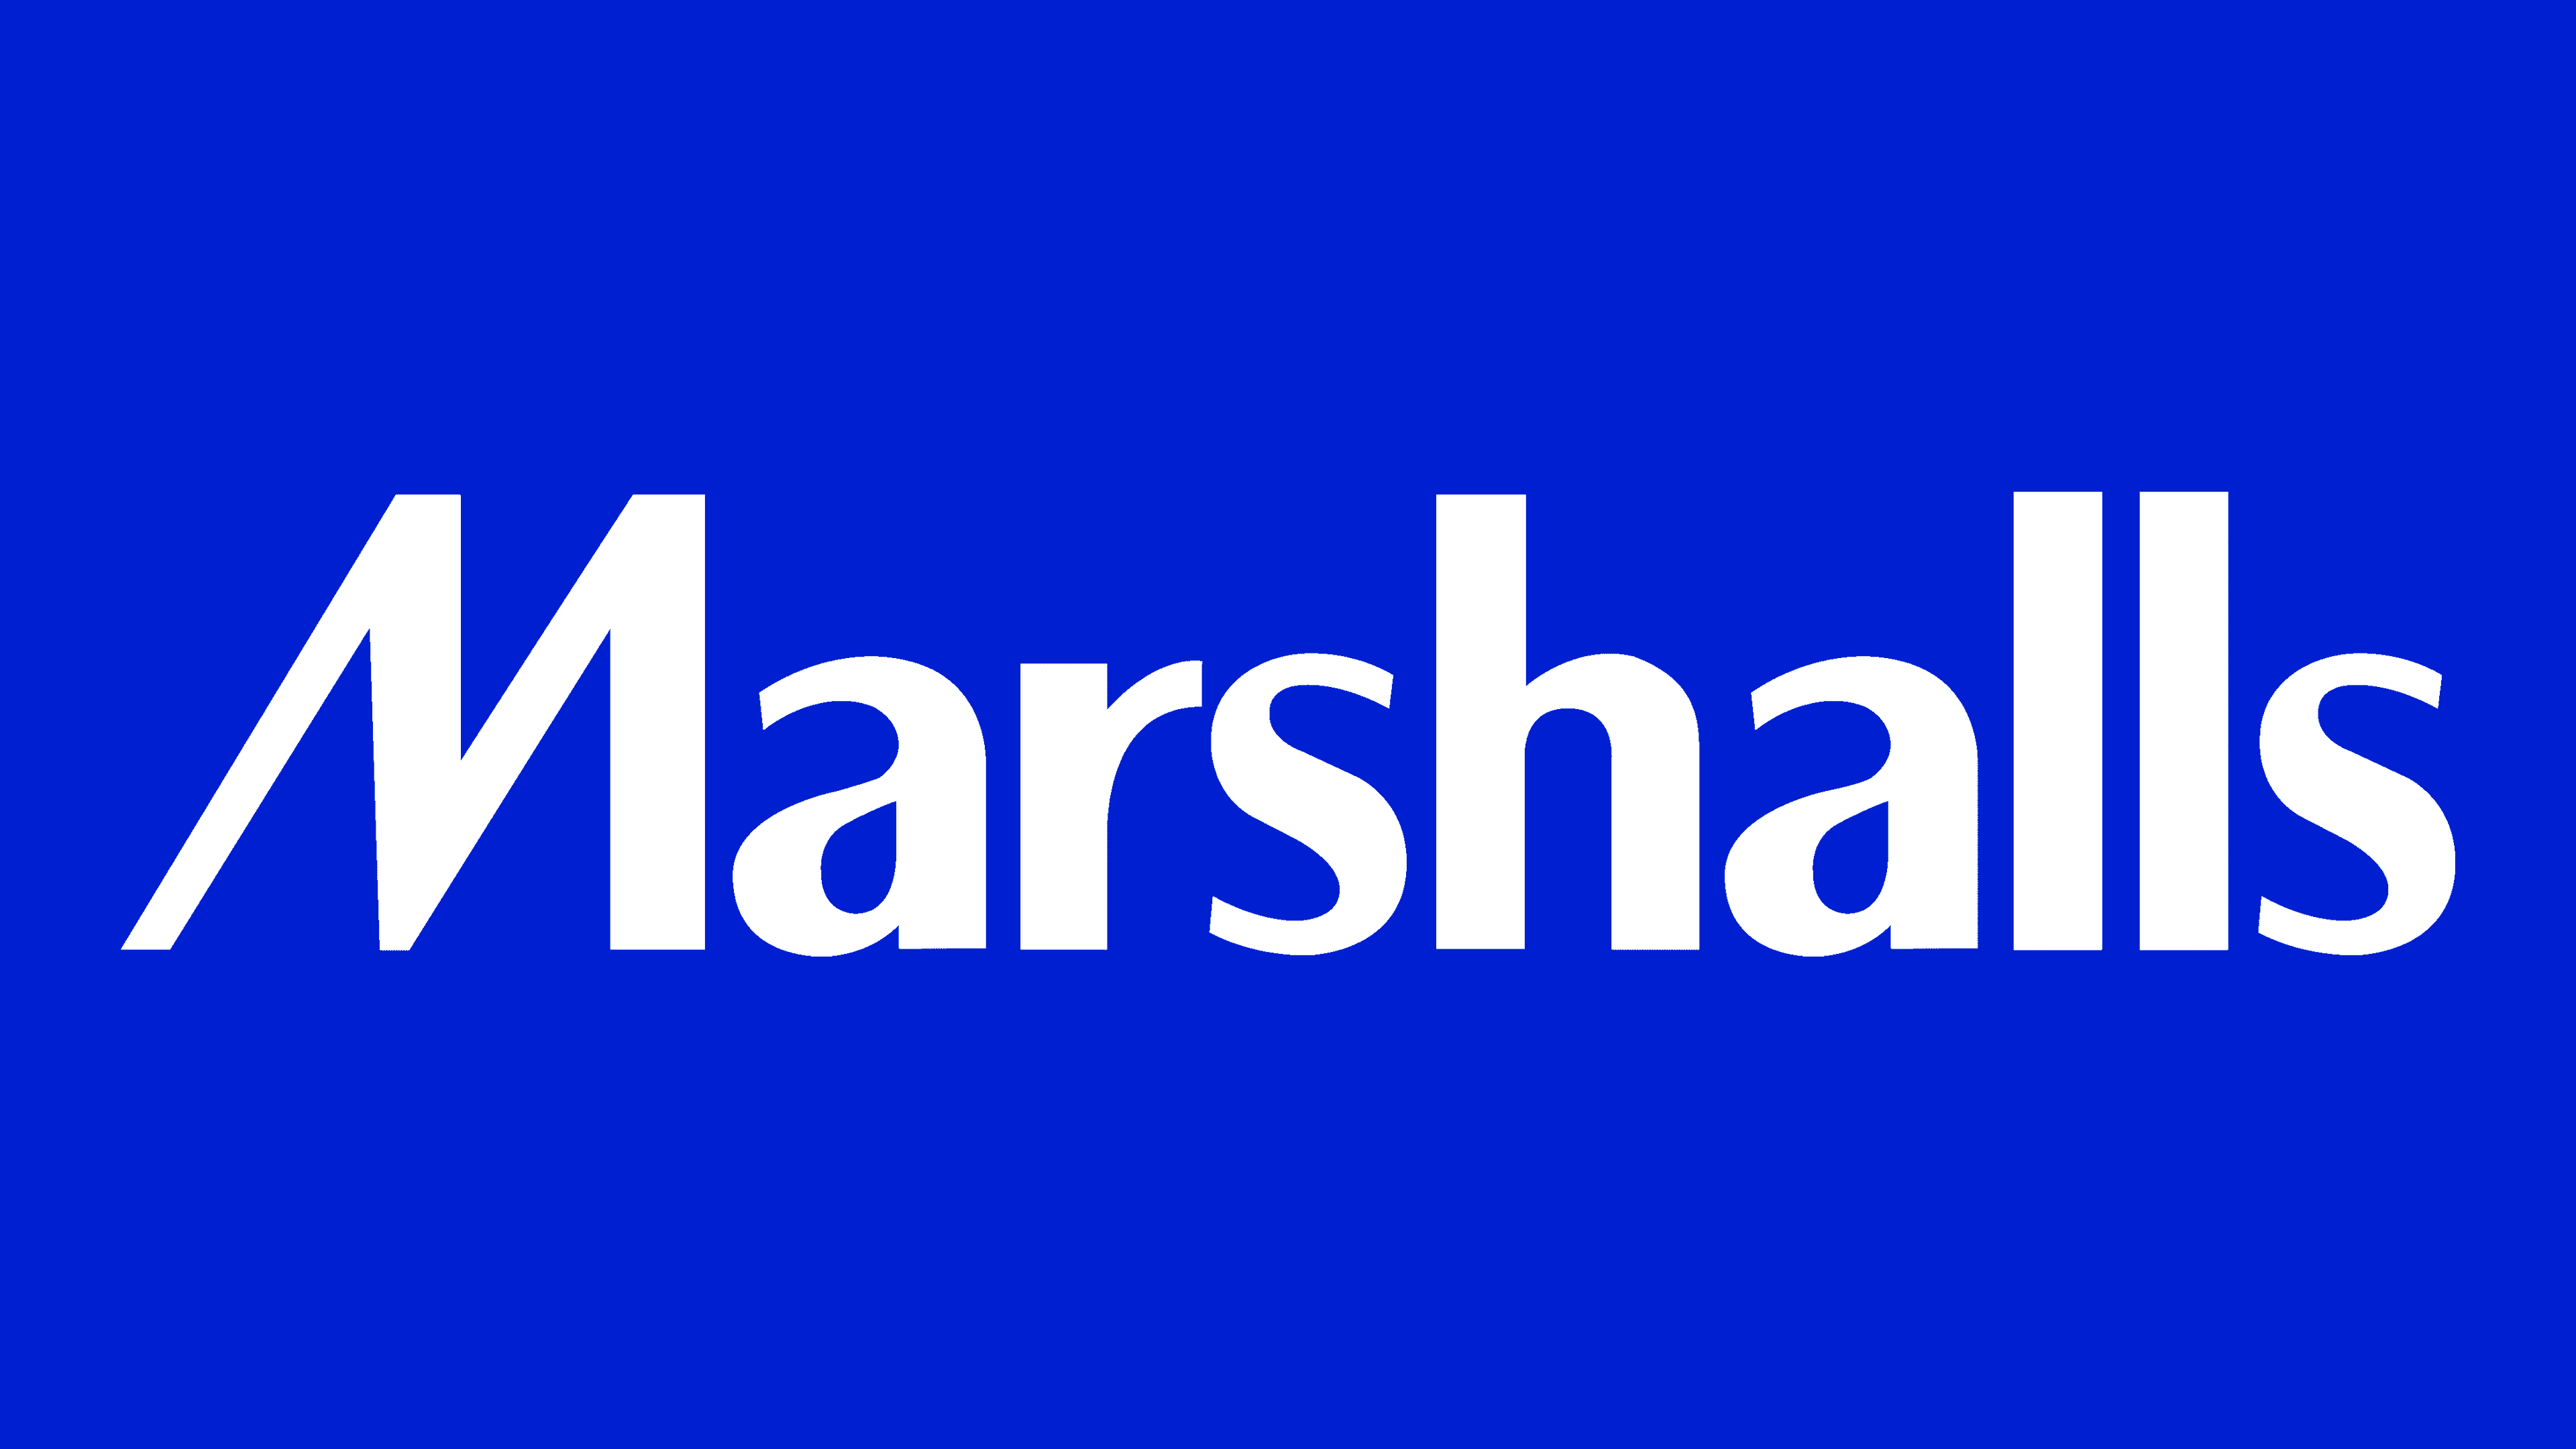 Marshalls Inc Logo, symbol, meaning, history, PNG, brand